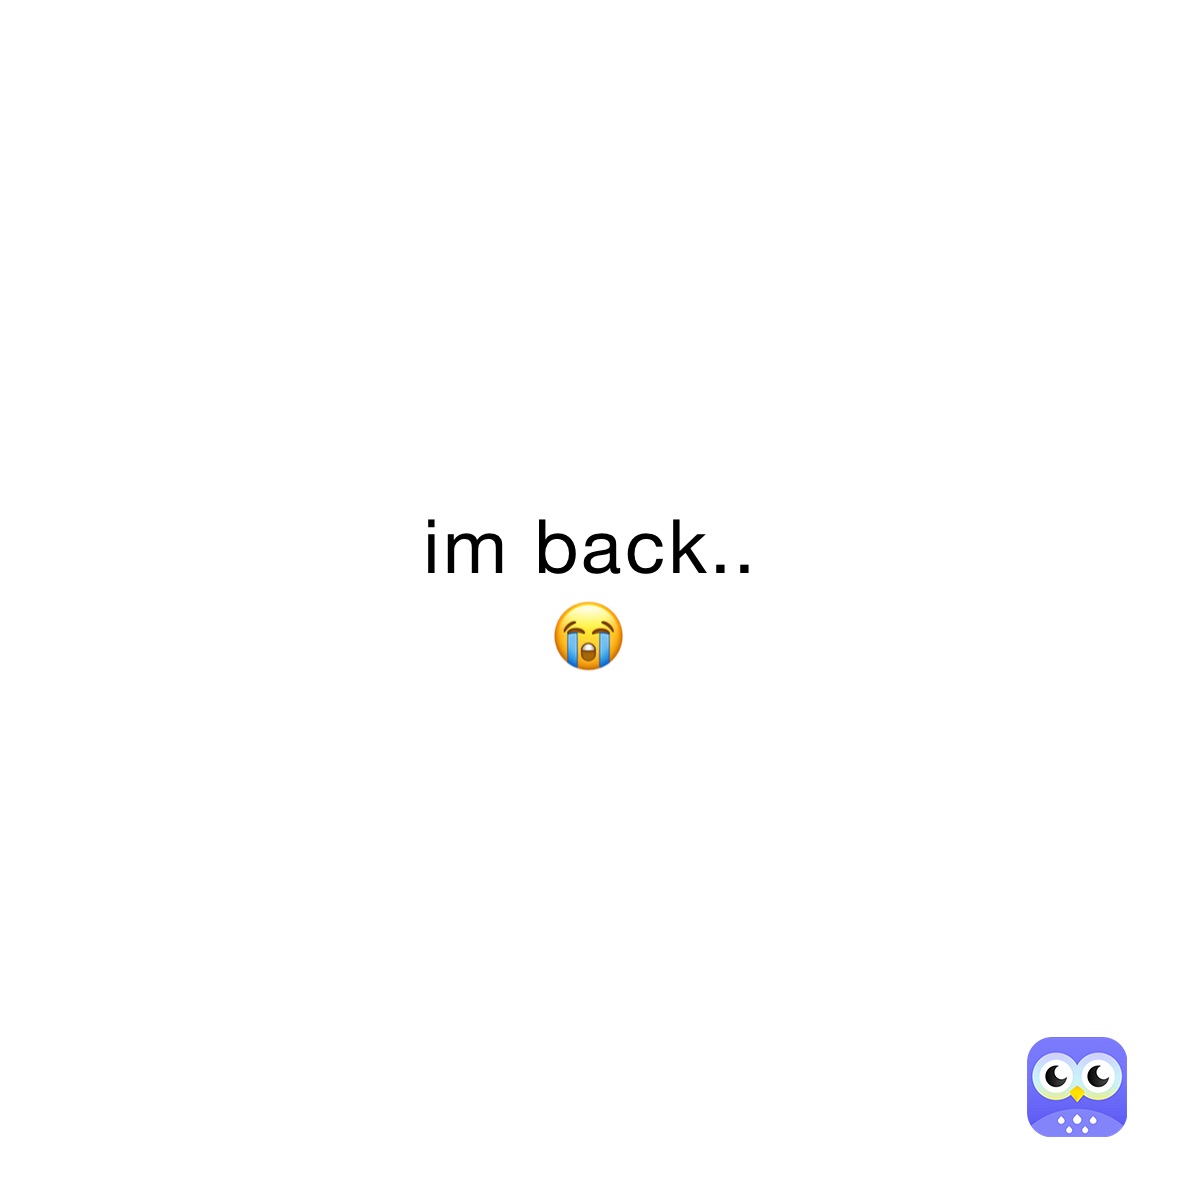 im back..
😭